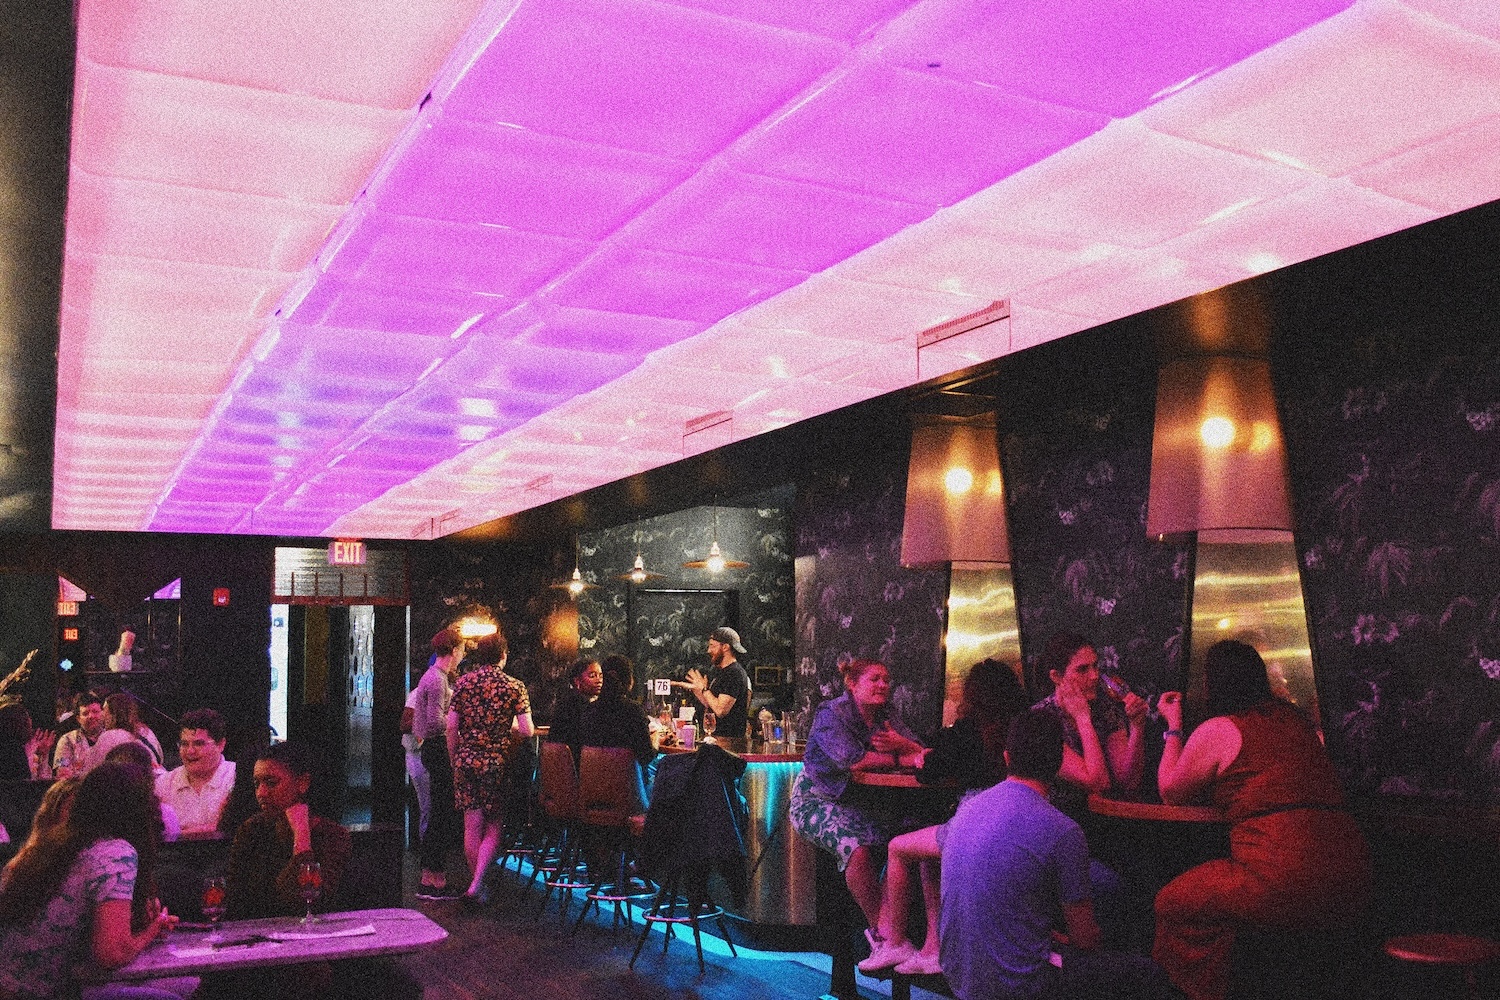 pink ceiling lights, blue floor lights, people mingling on a bar